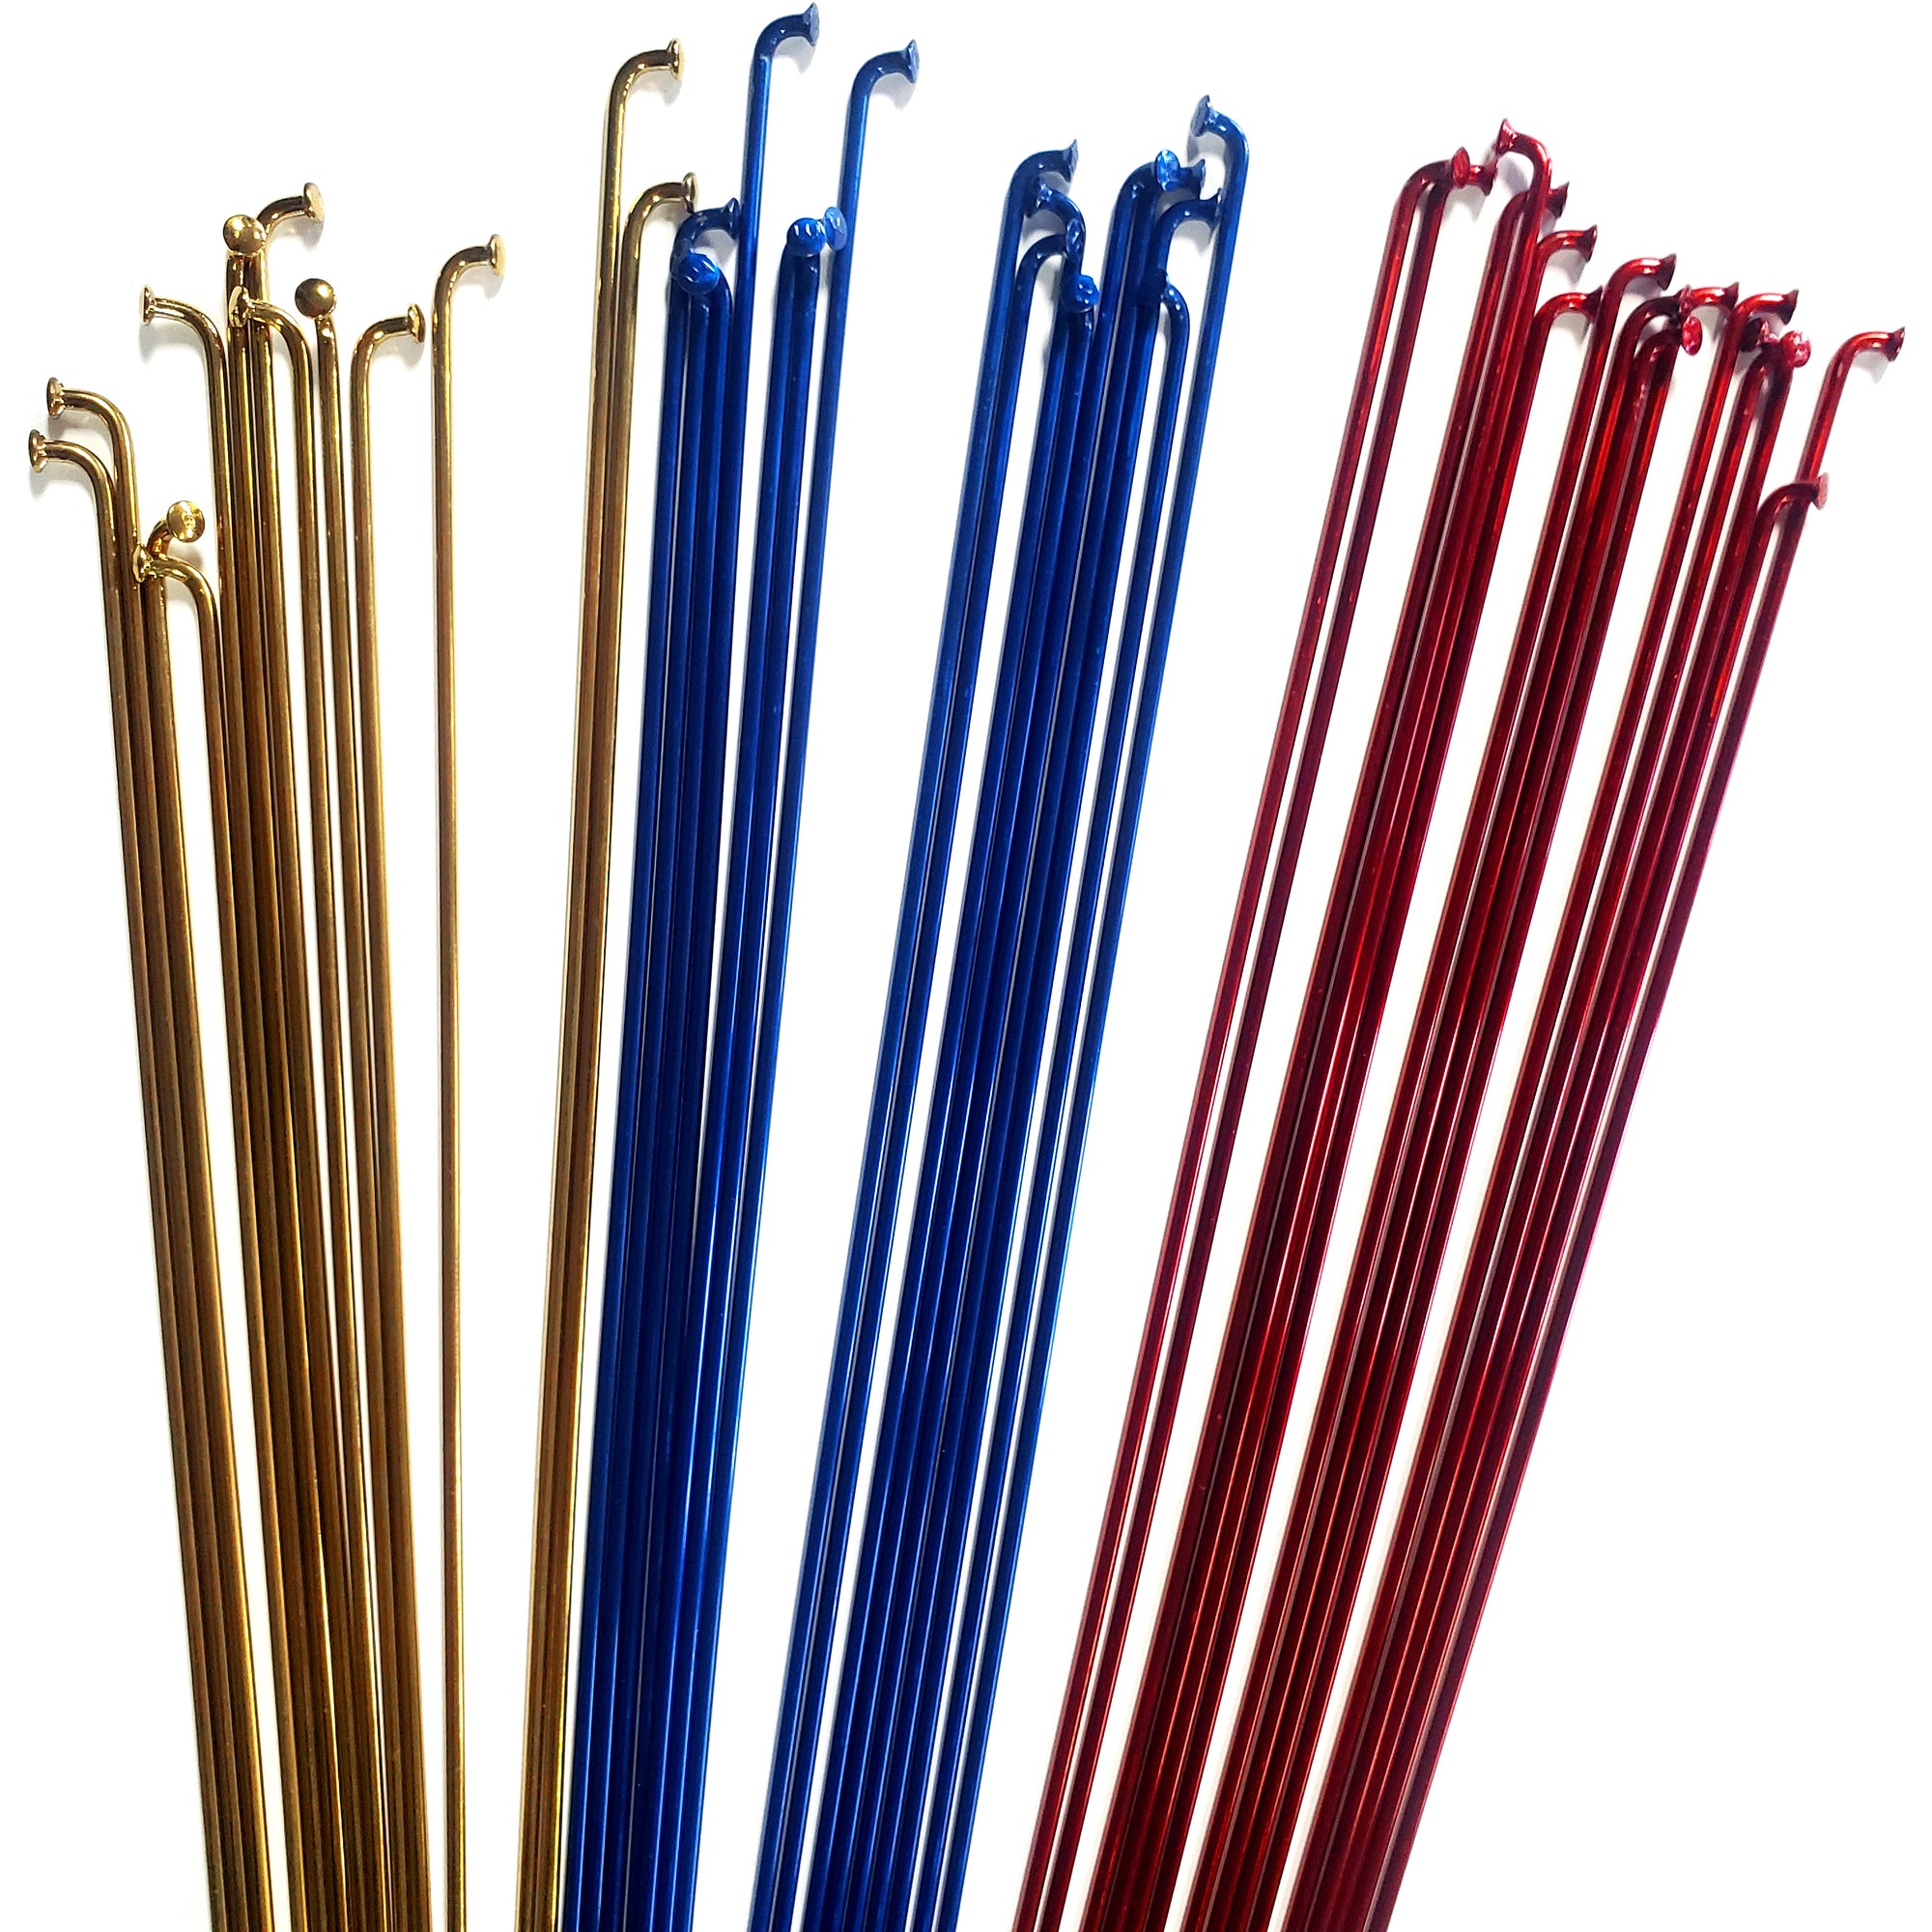 Stainless Steel Spoke - Single - Metallic Colors - Choose color & length